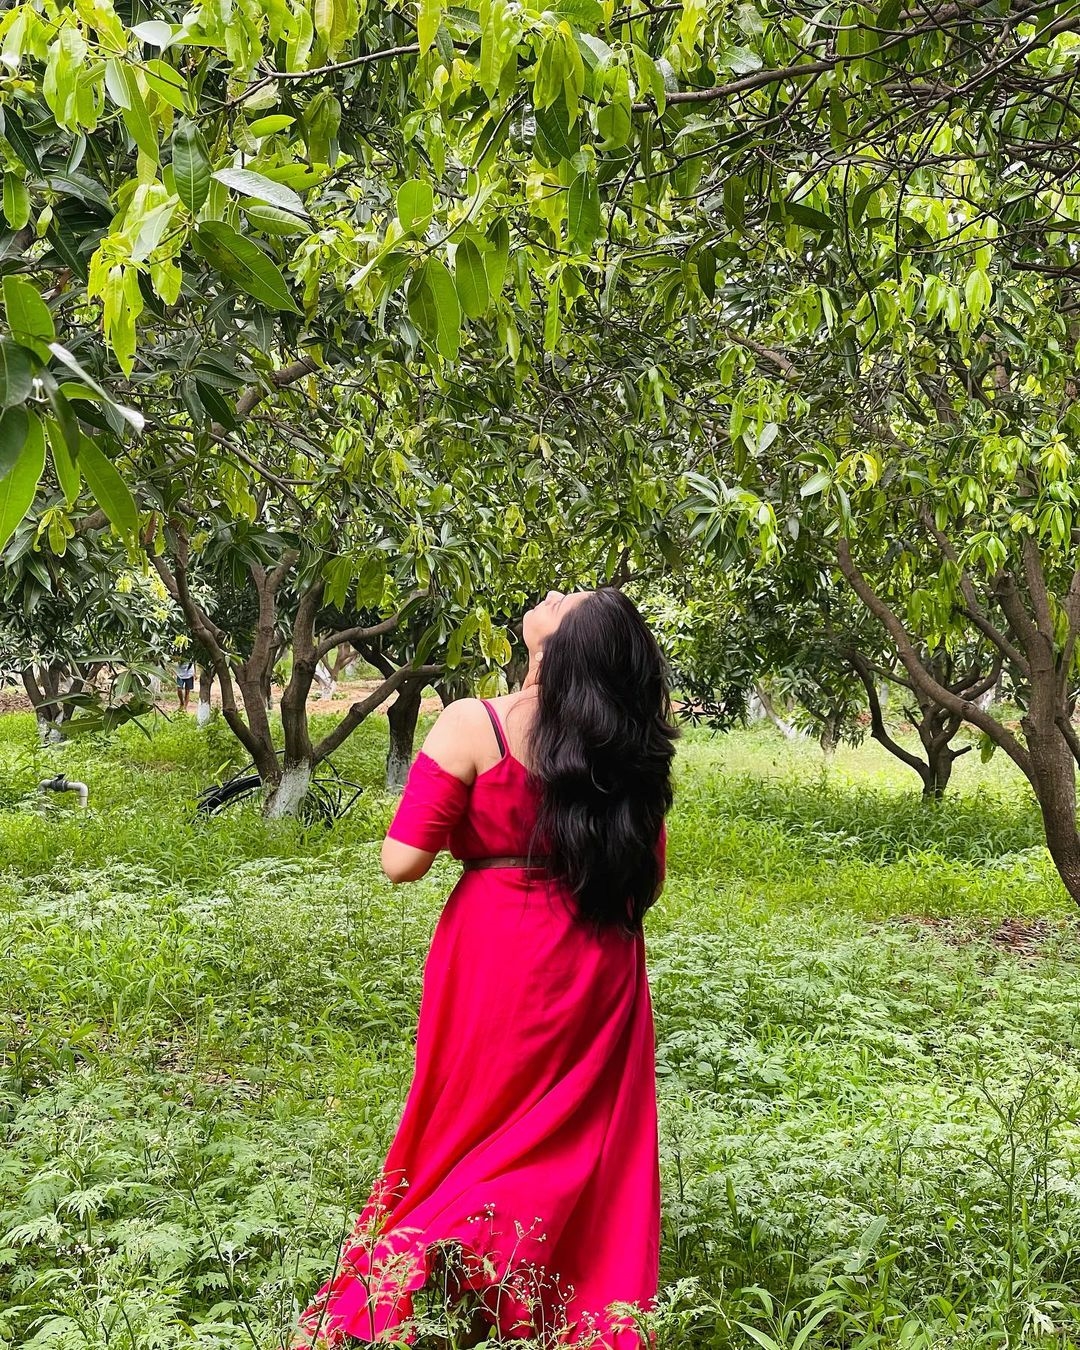 Sreemukhi New Clicks In Red Dress